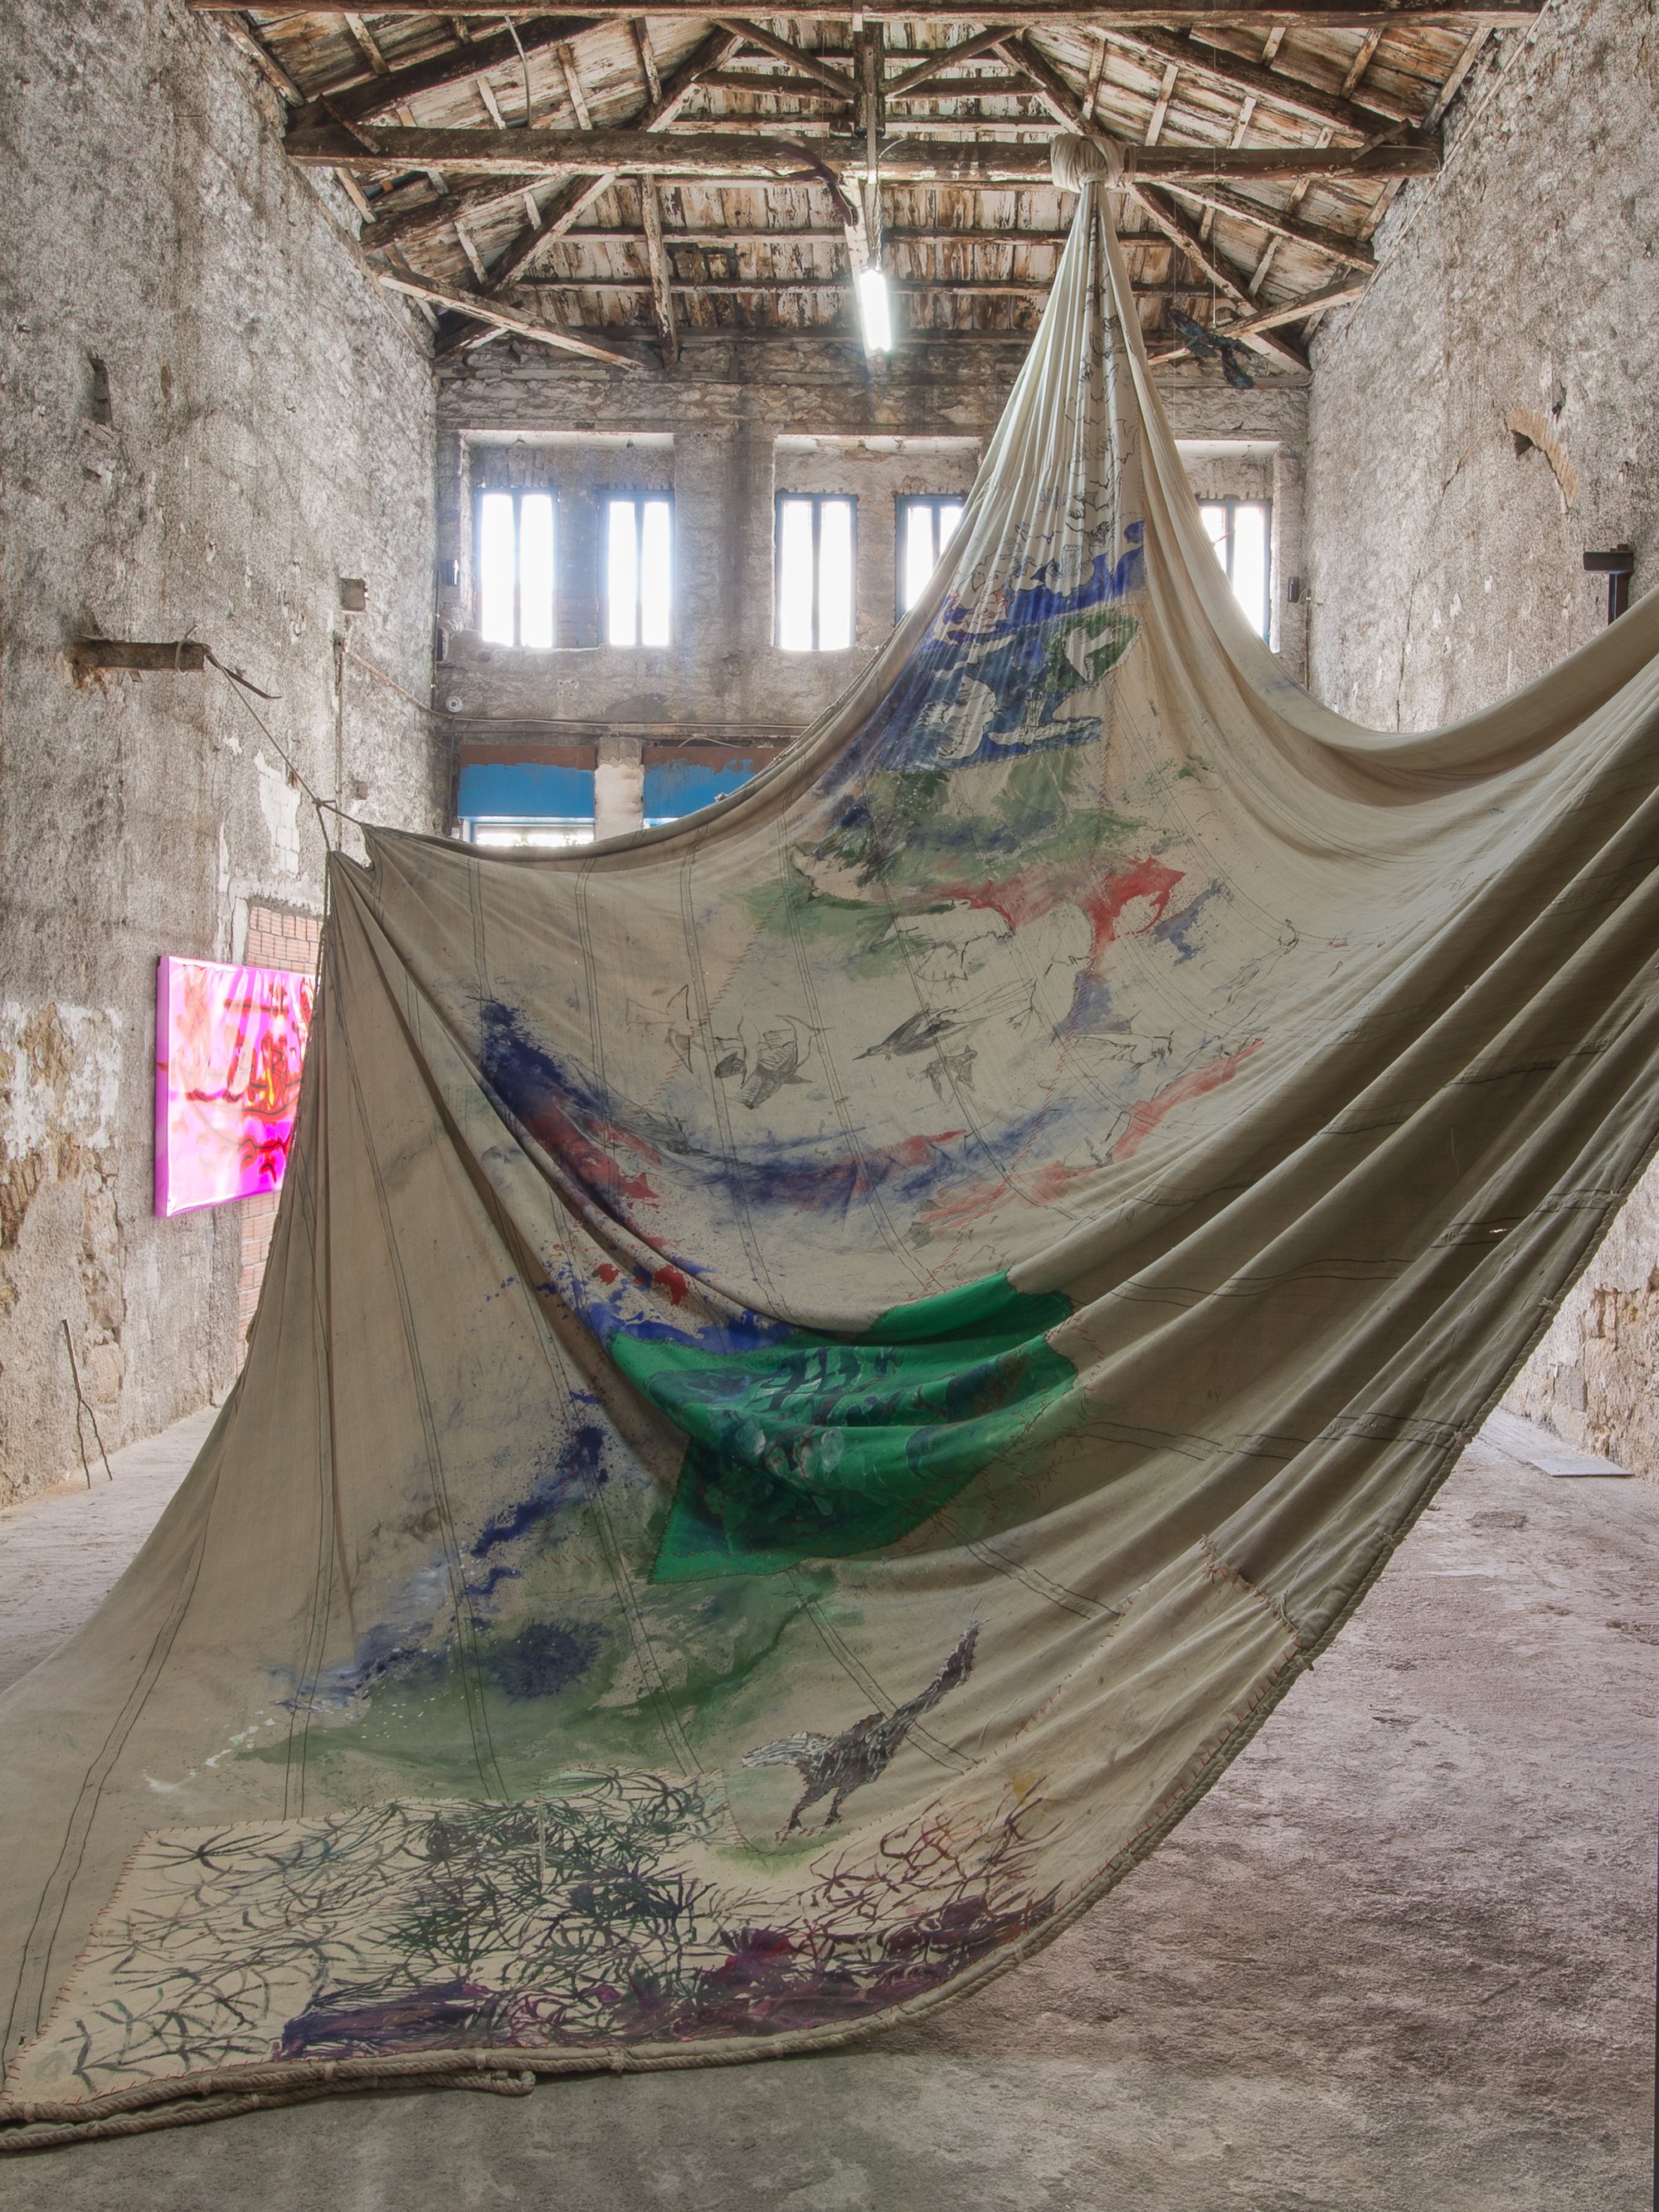 Anna Boghiguian, Trade + Birds, sail canvas, painted Birds: plaster, paint, wax on gauze bandage, 2000 x 800 cm, 2018